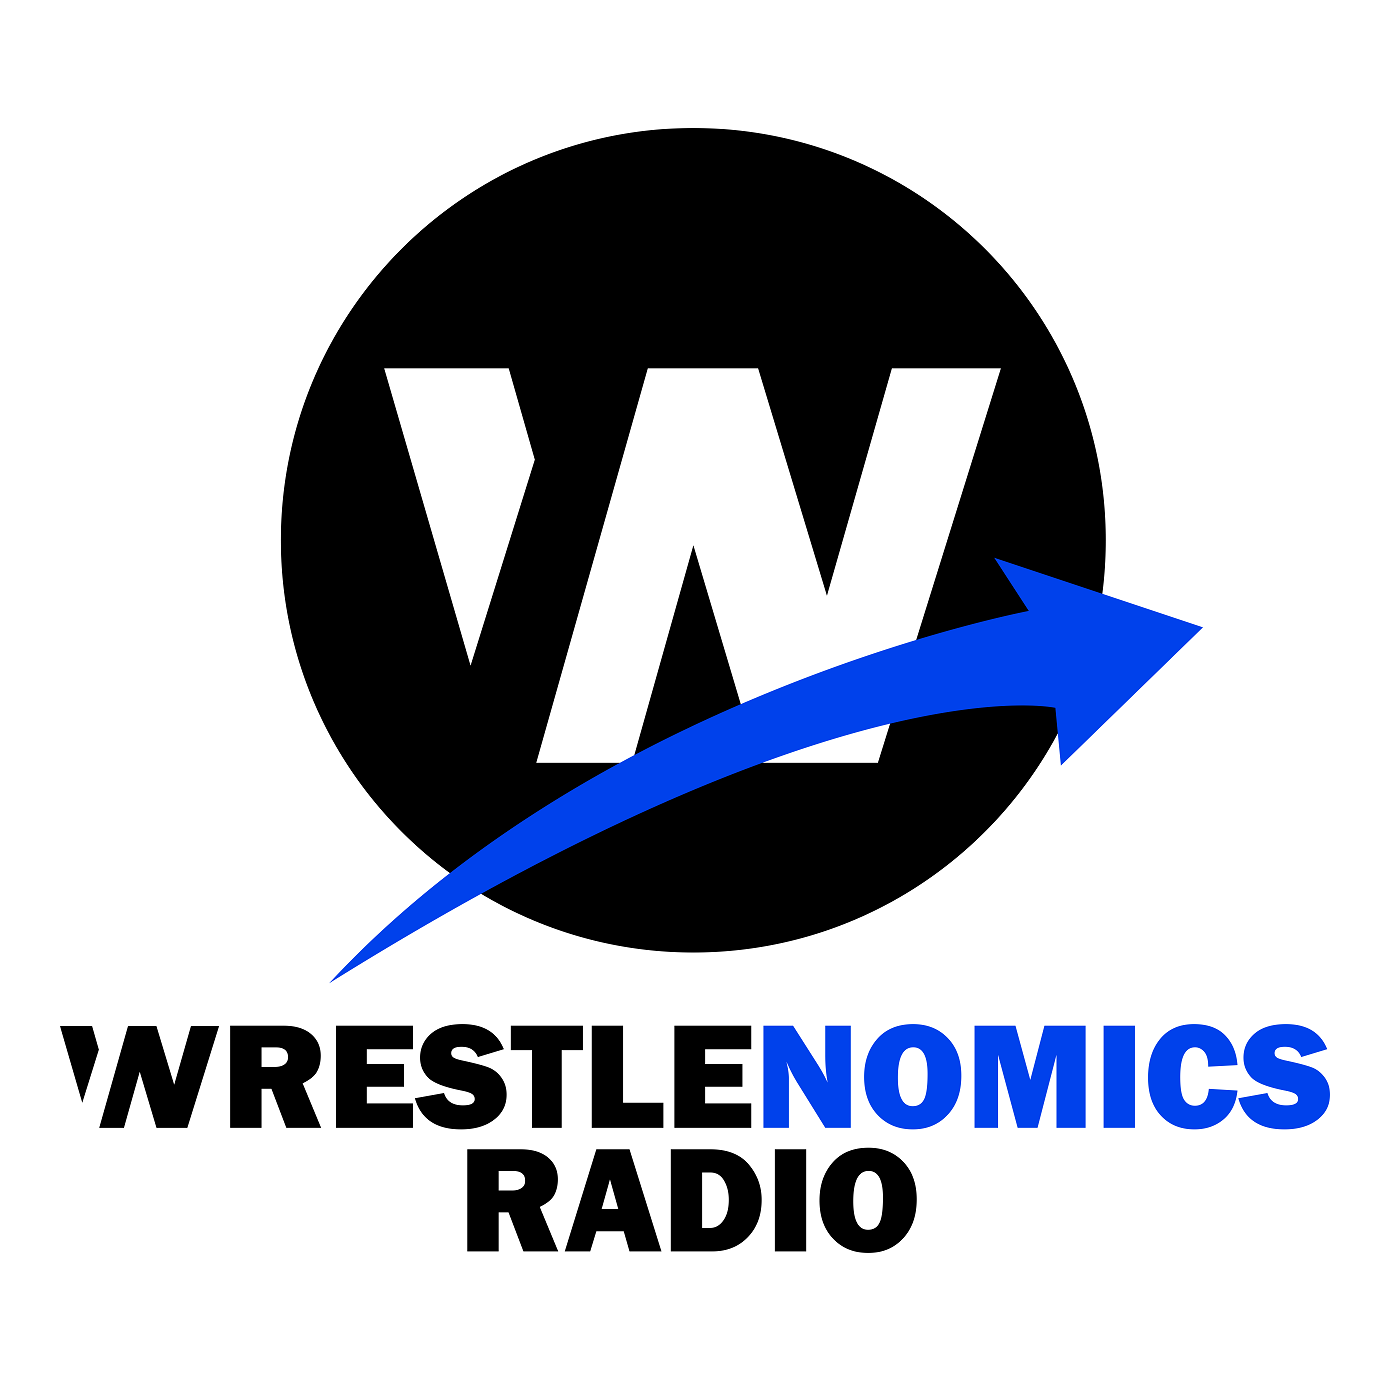 58: Wrestlenomics Radio: Hogan returning to WWE? ROH/NJPW MSG show, WWE Q2 preview, Sinclair-Tribune